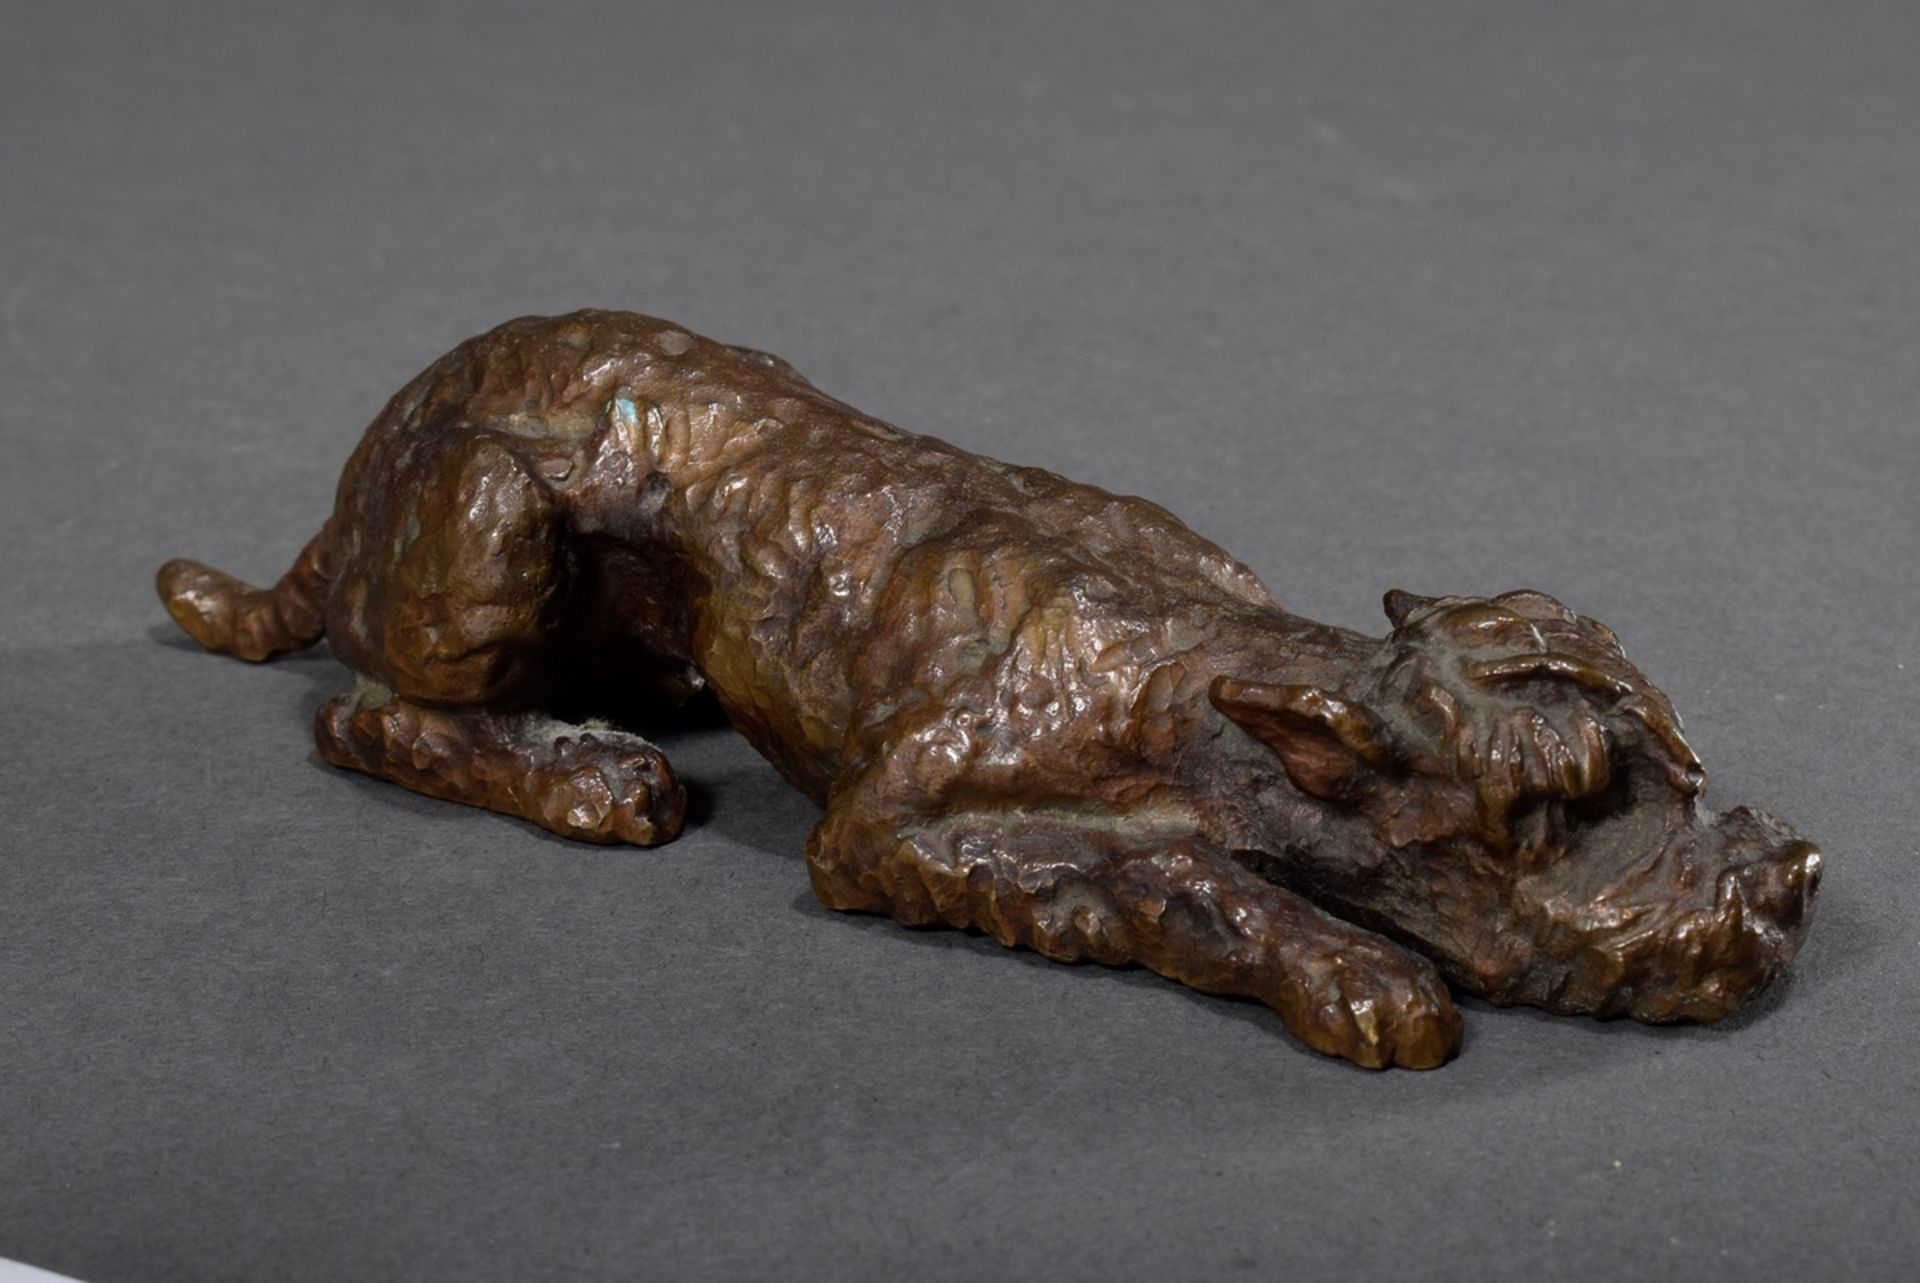 Sintenis, Renée (1888-1965) "Liegender Terrier" 1928, bronze dark patinated, monogr. "RS" on the bo - Image 4 of 6